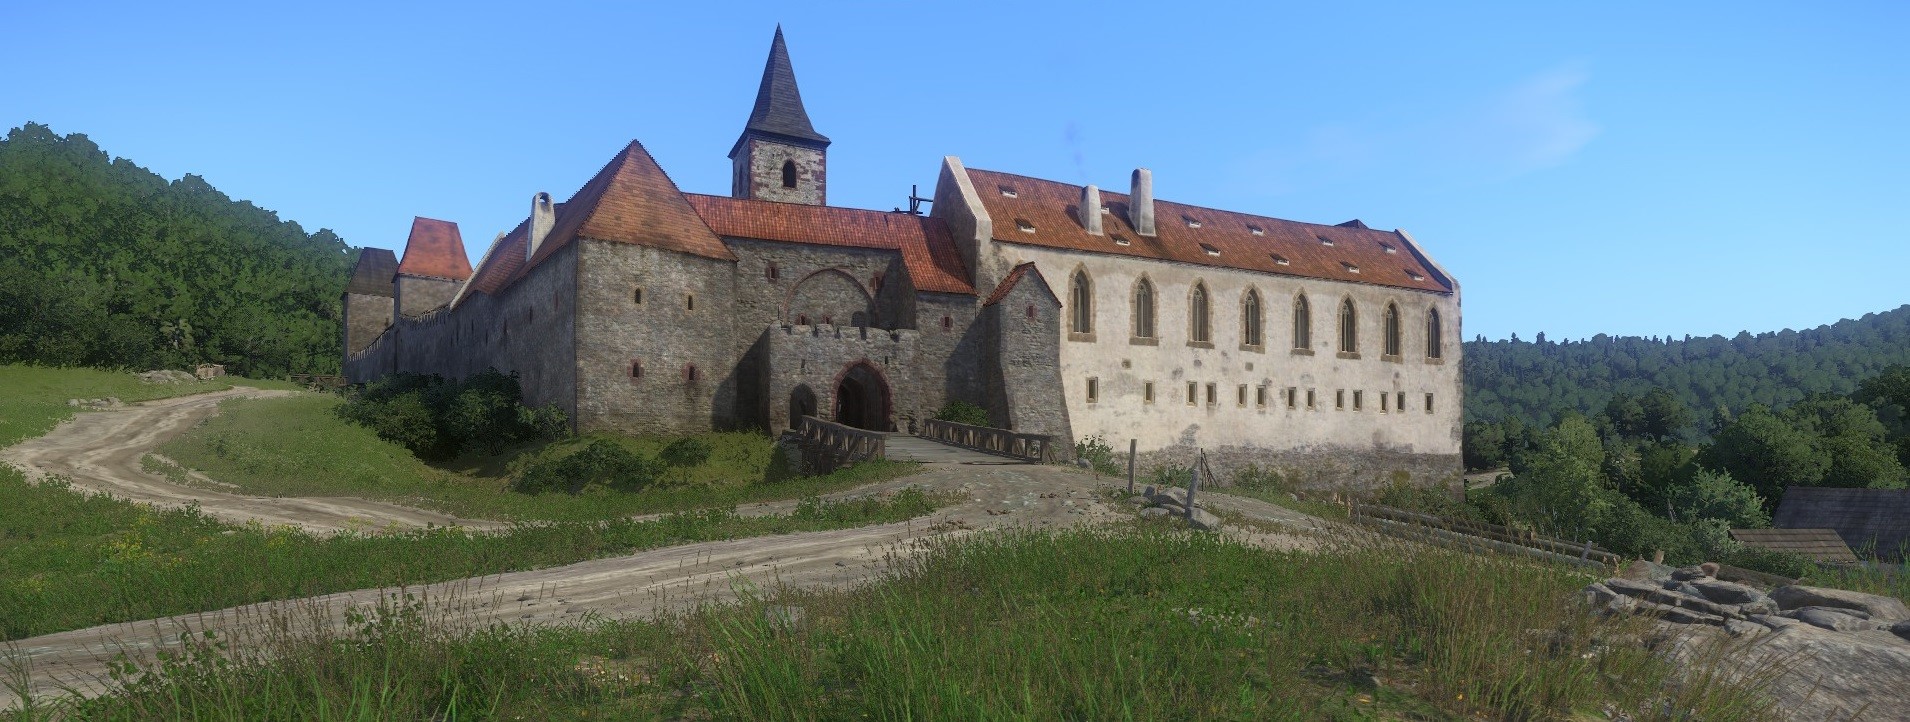 Кингдом кам монастырь